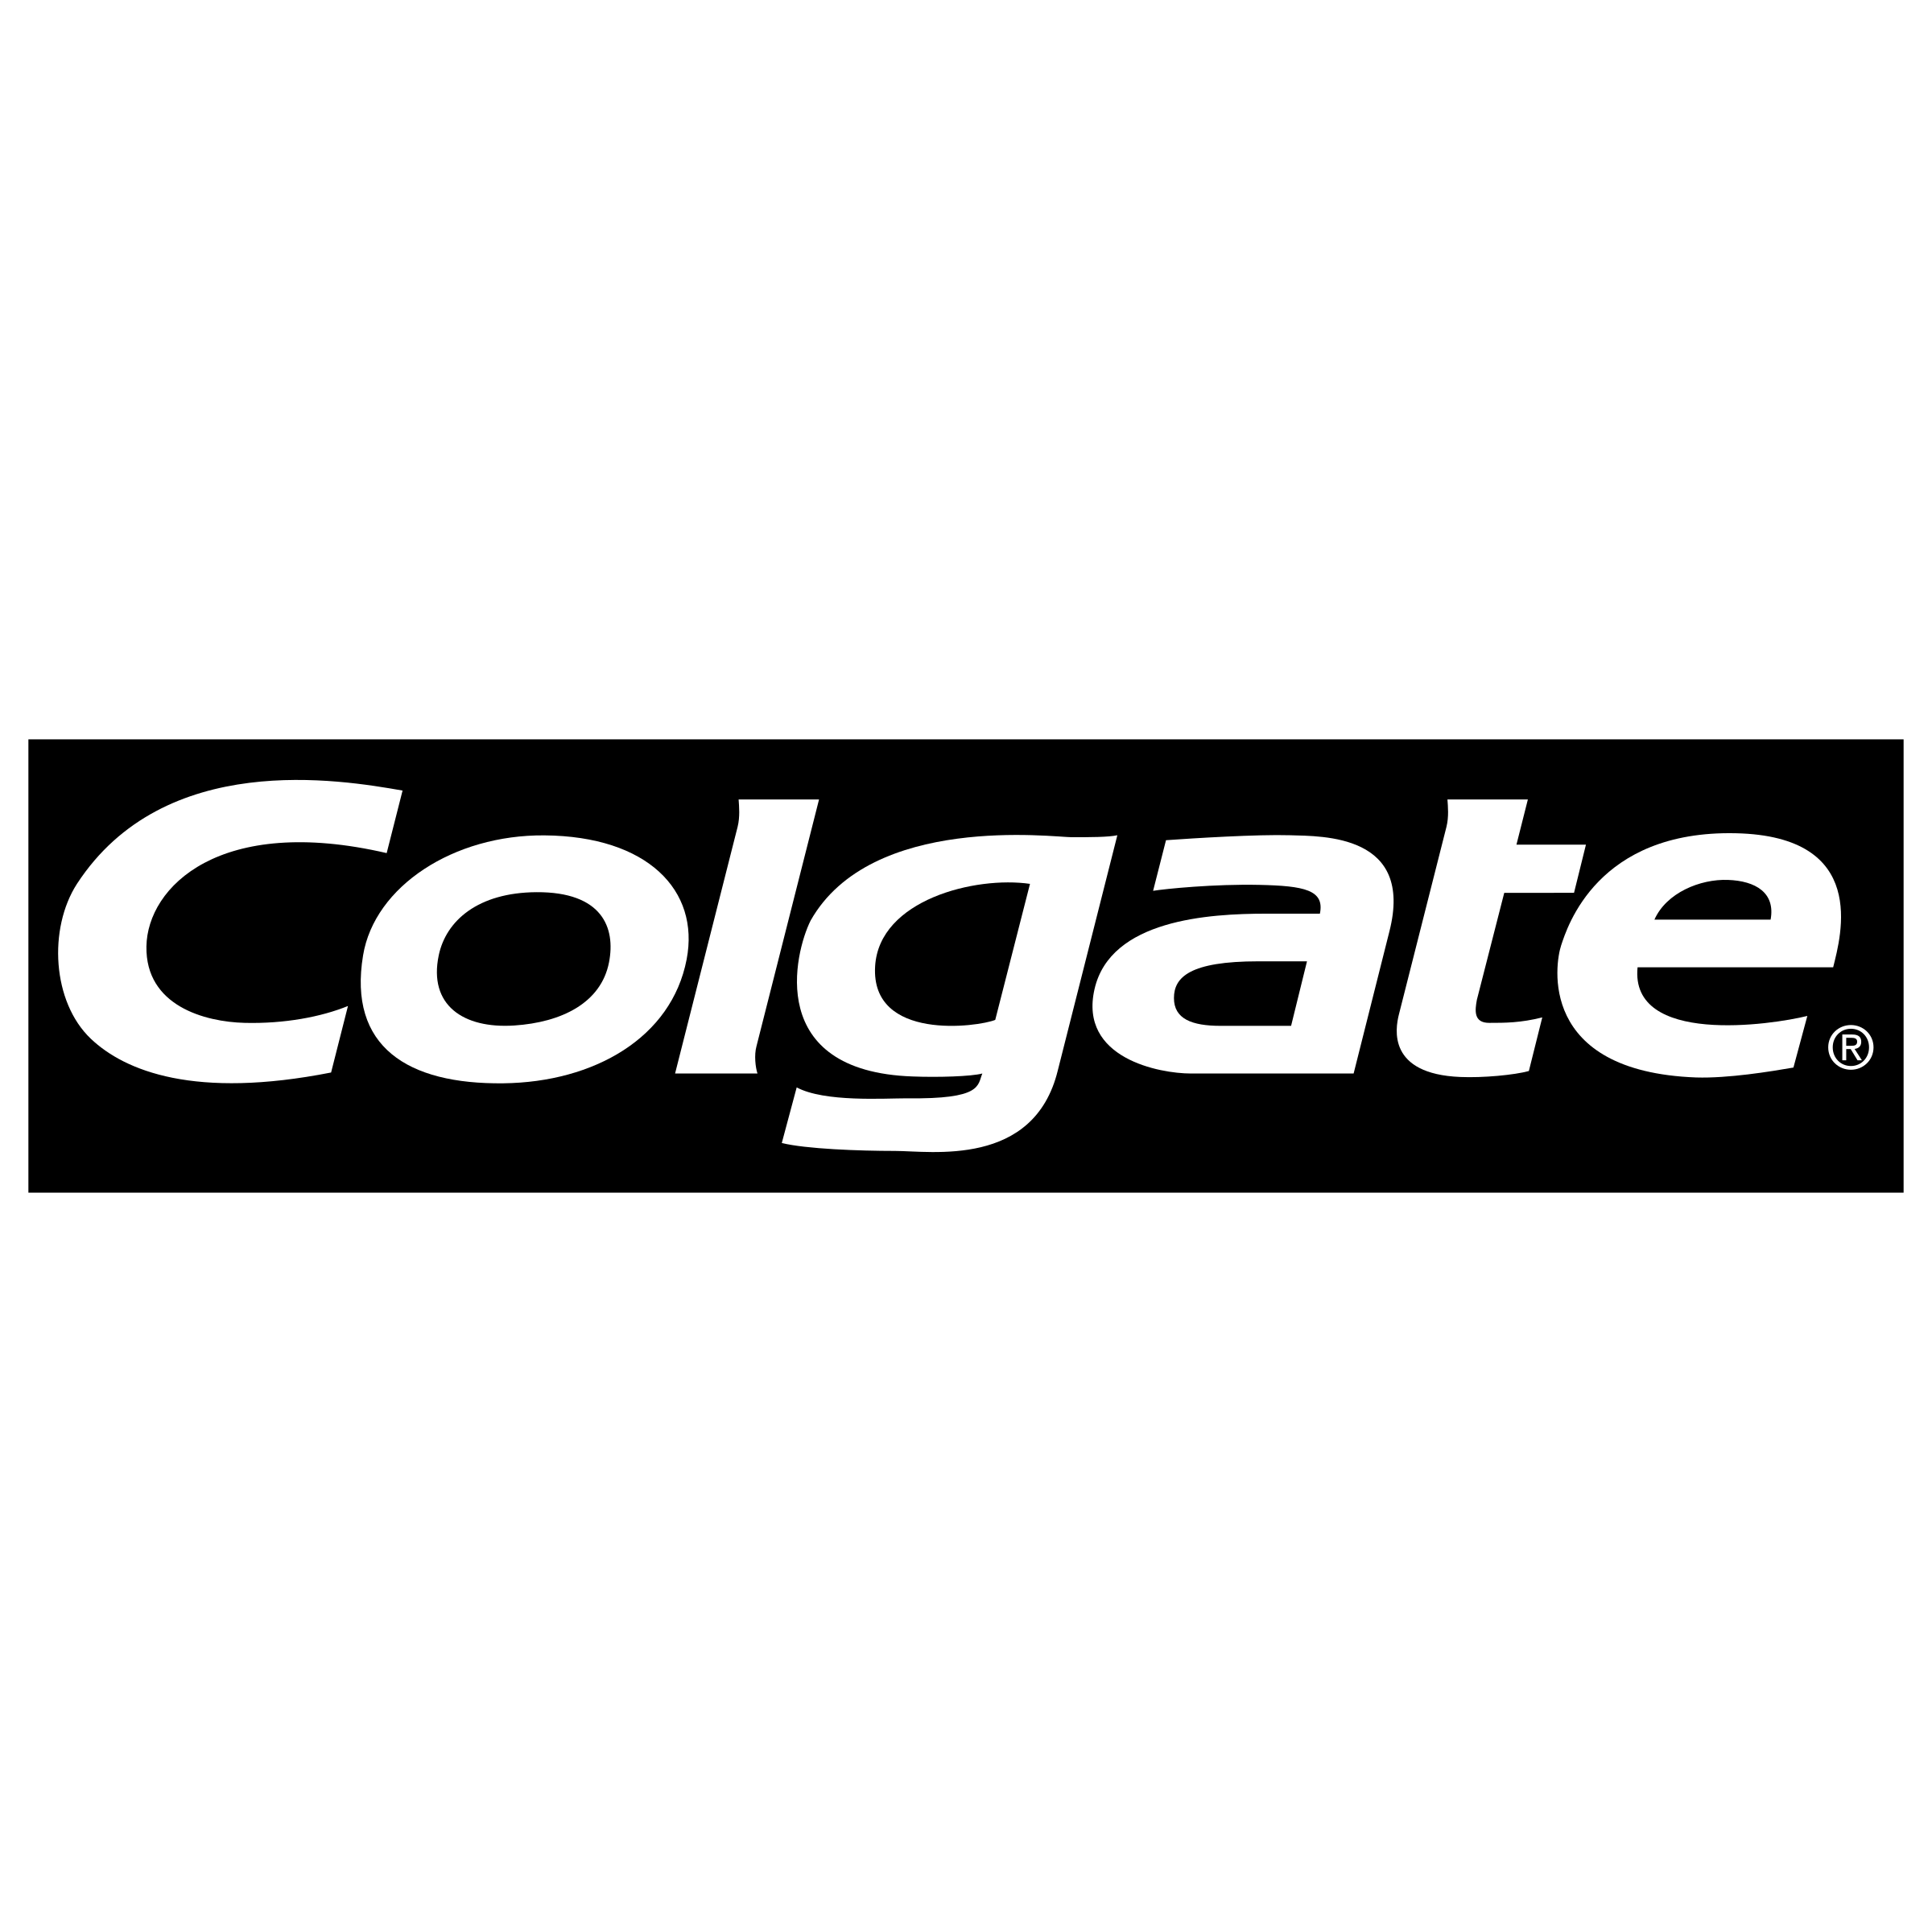 colgate-1242-logo-png-transparent.png